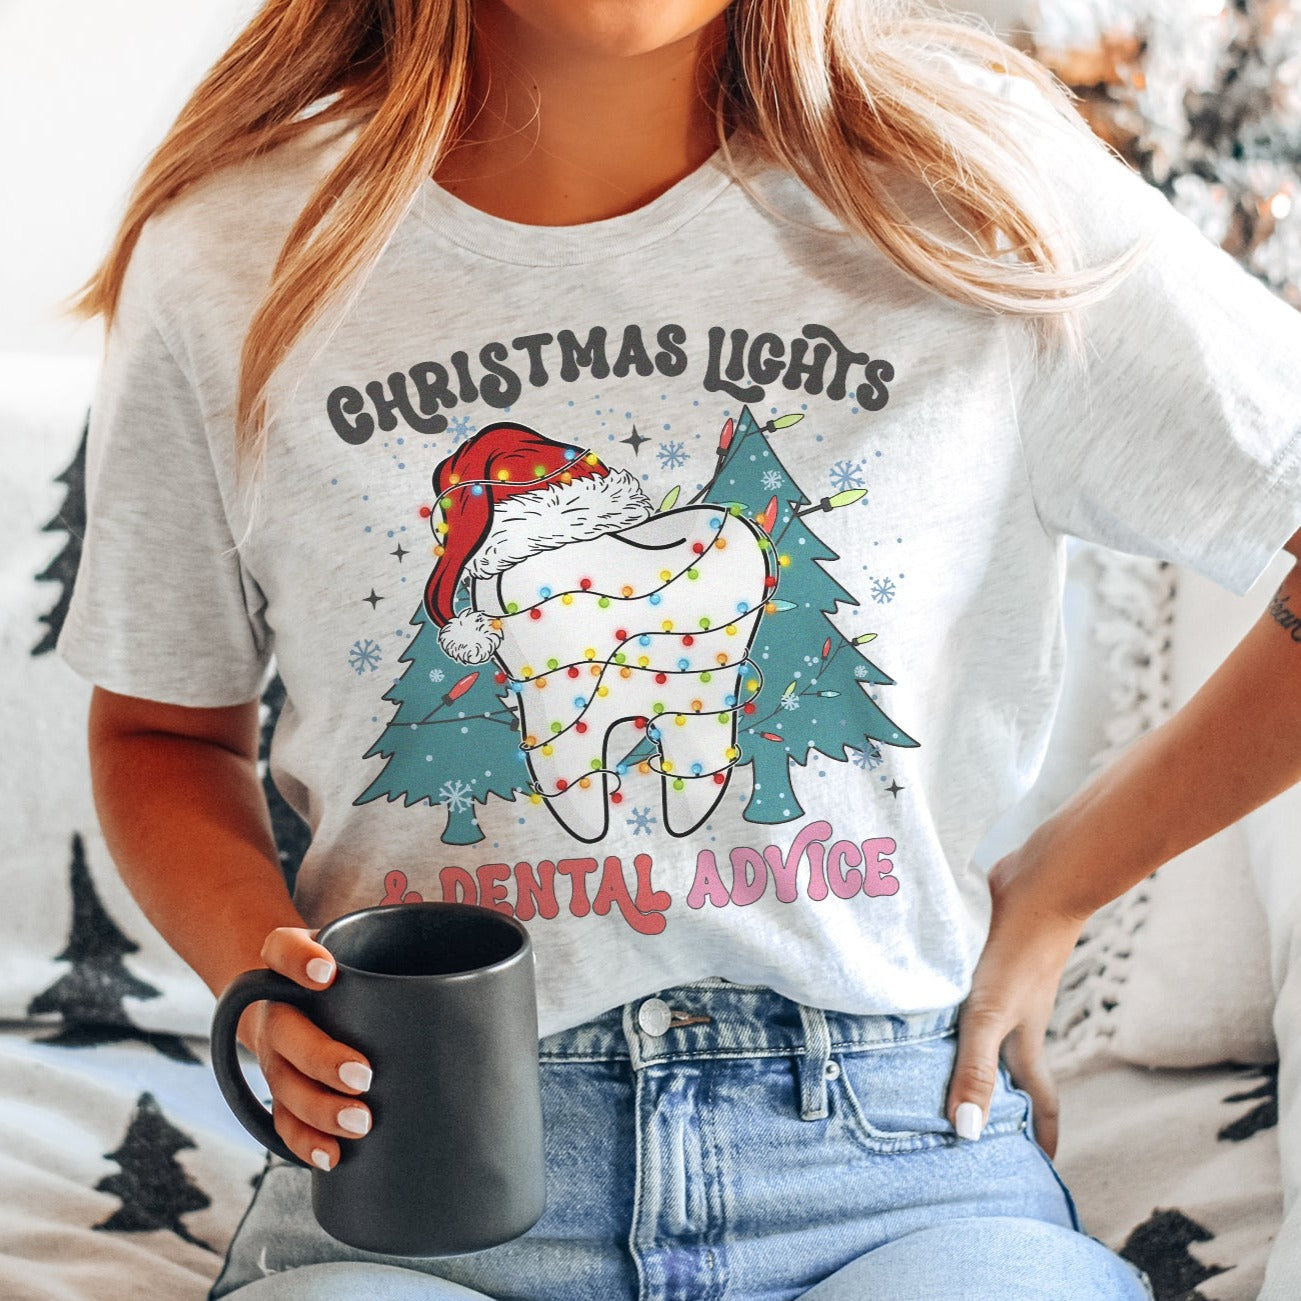 Christmas Lights & Dental Advice T-Shirt